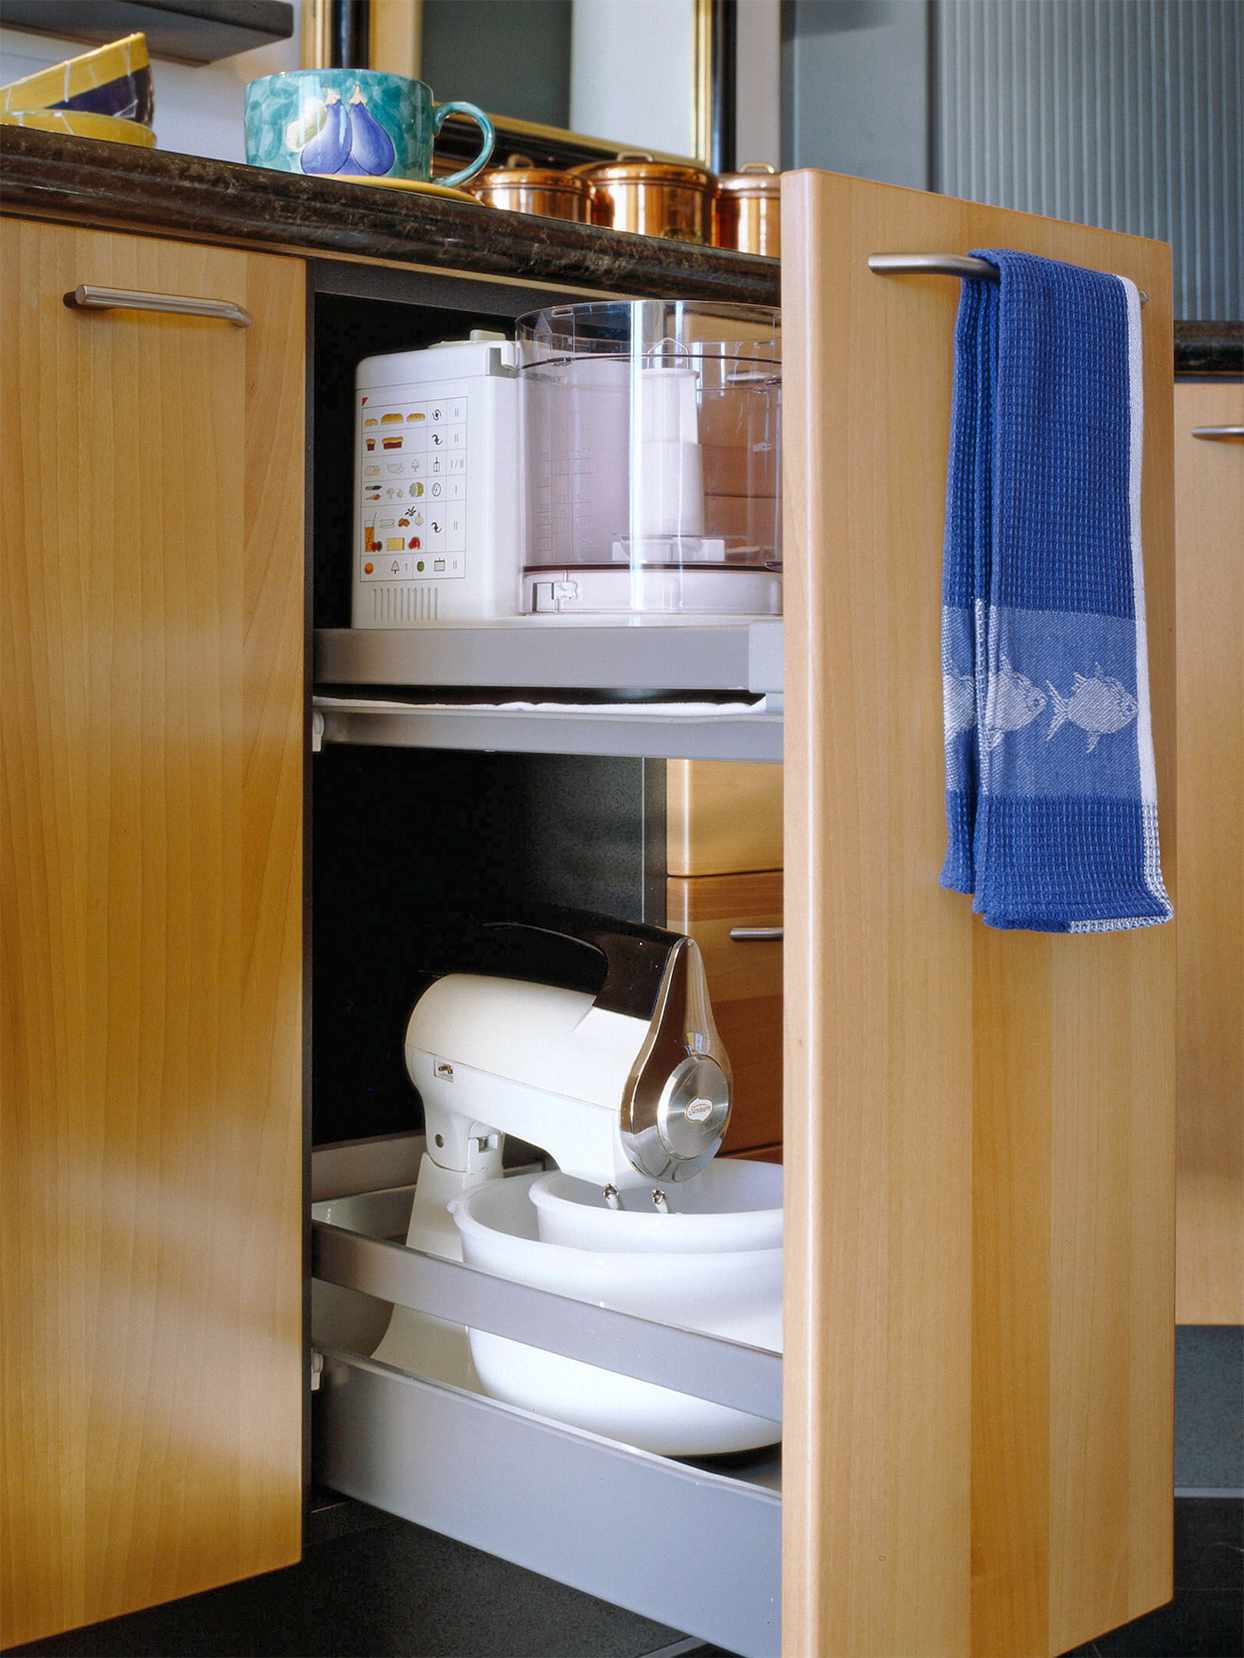 kitchen slide-out storage mixer blonde wood blue towel